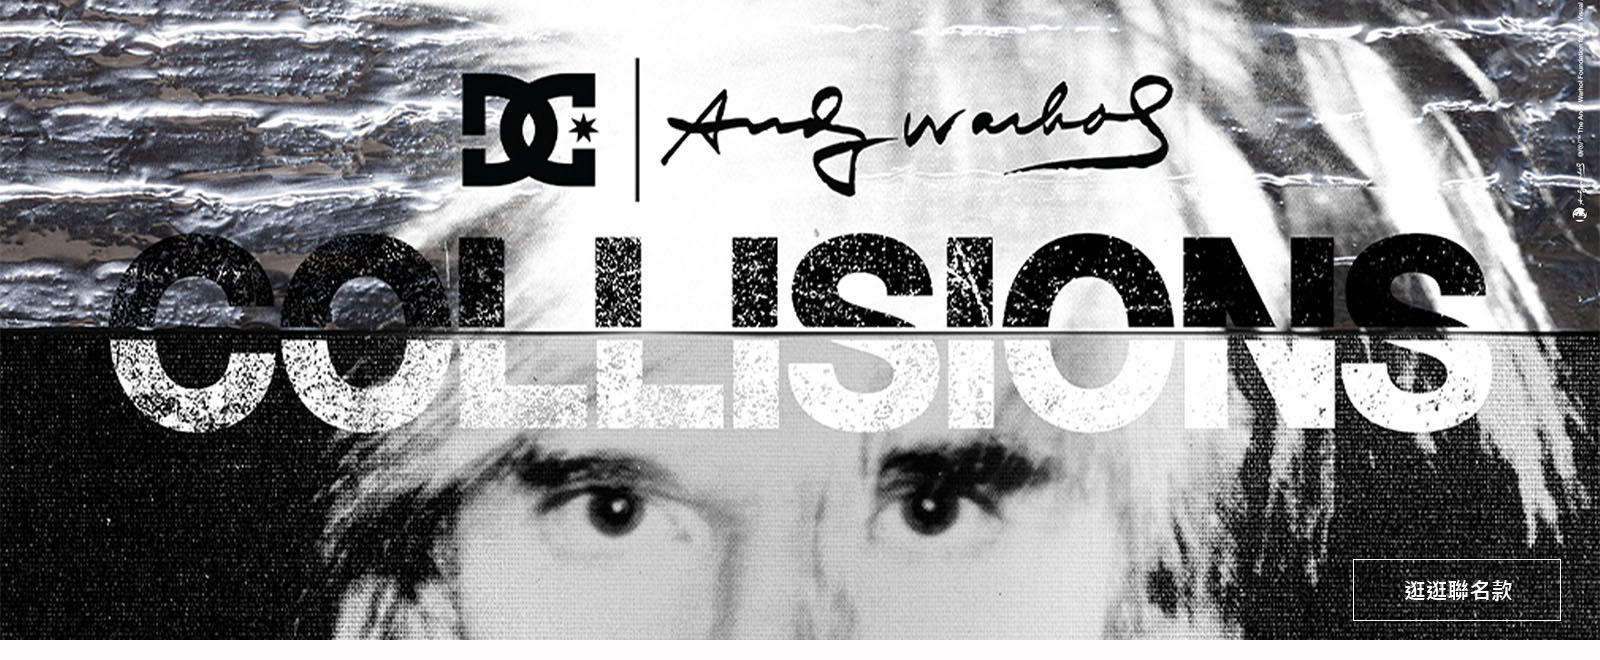 DC X Andy Warhol 聯名款上市!